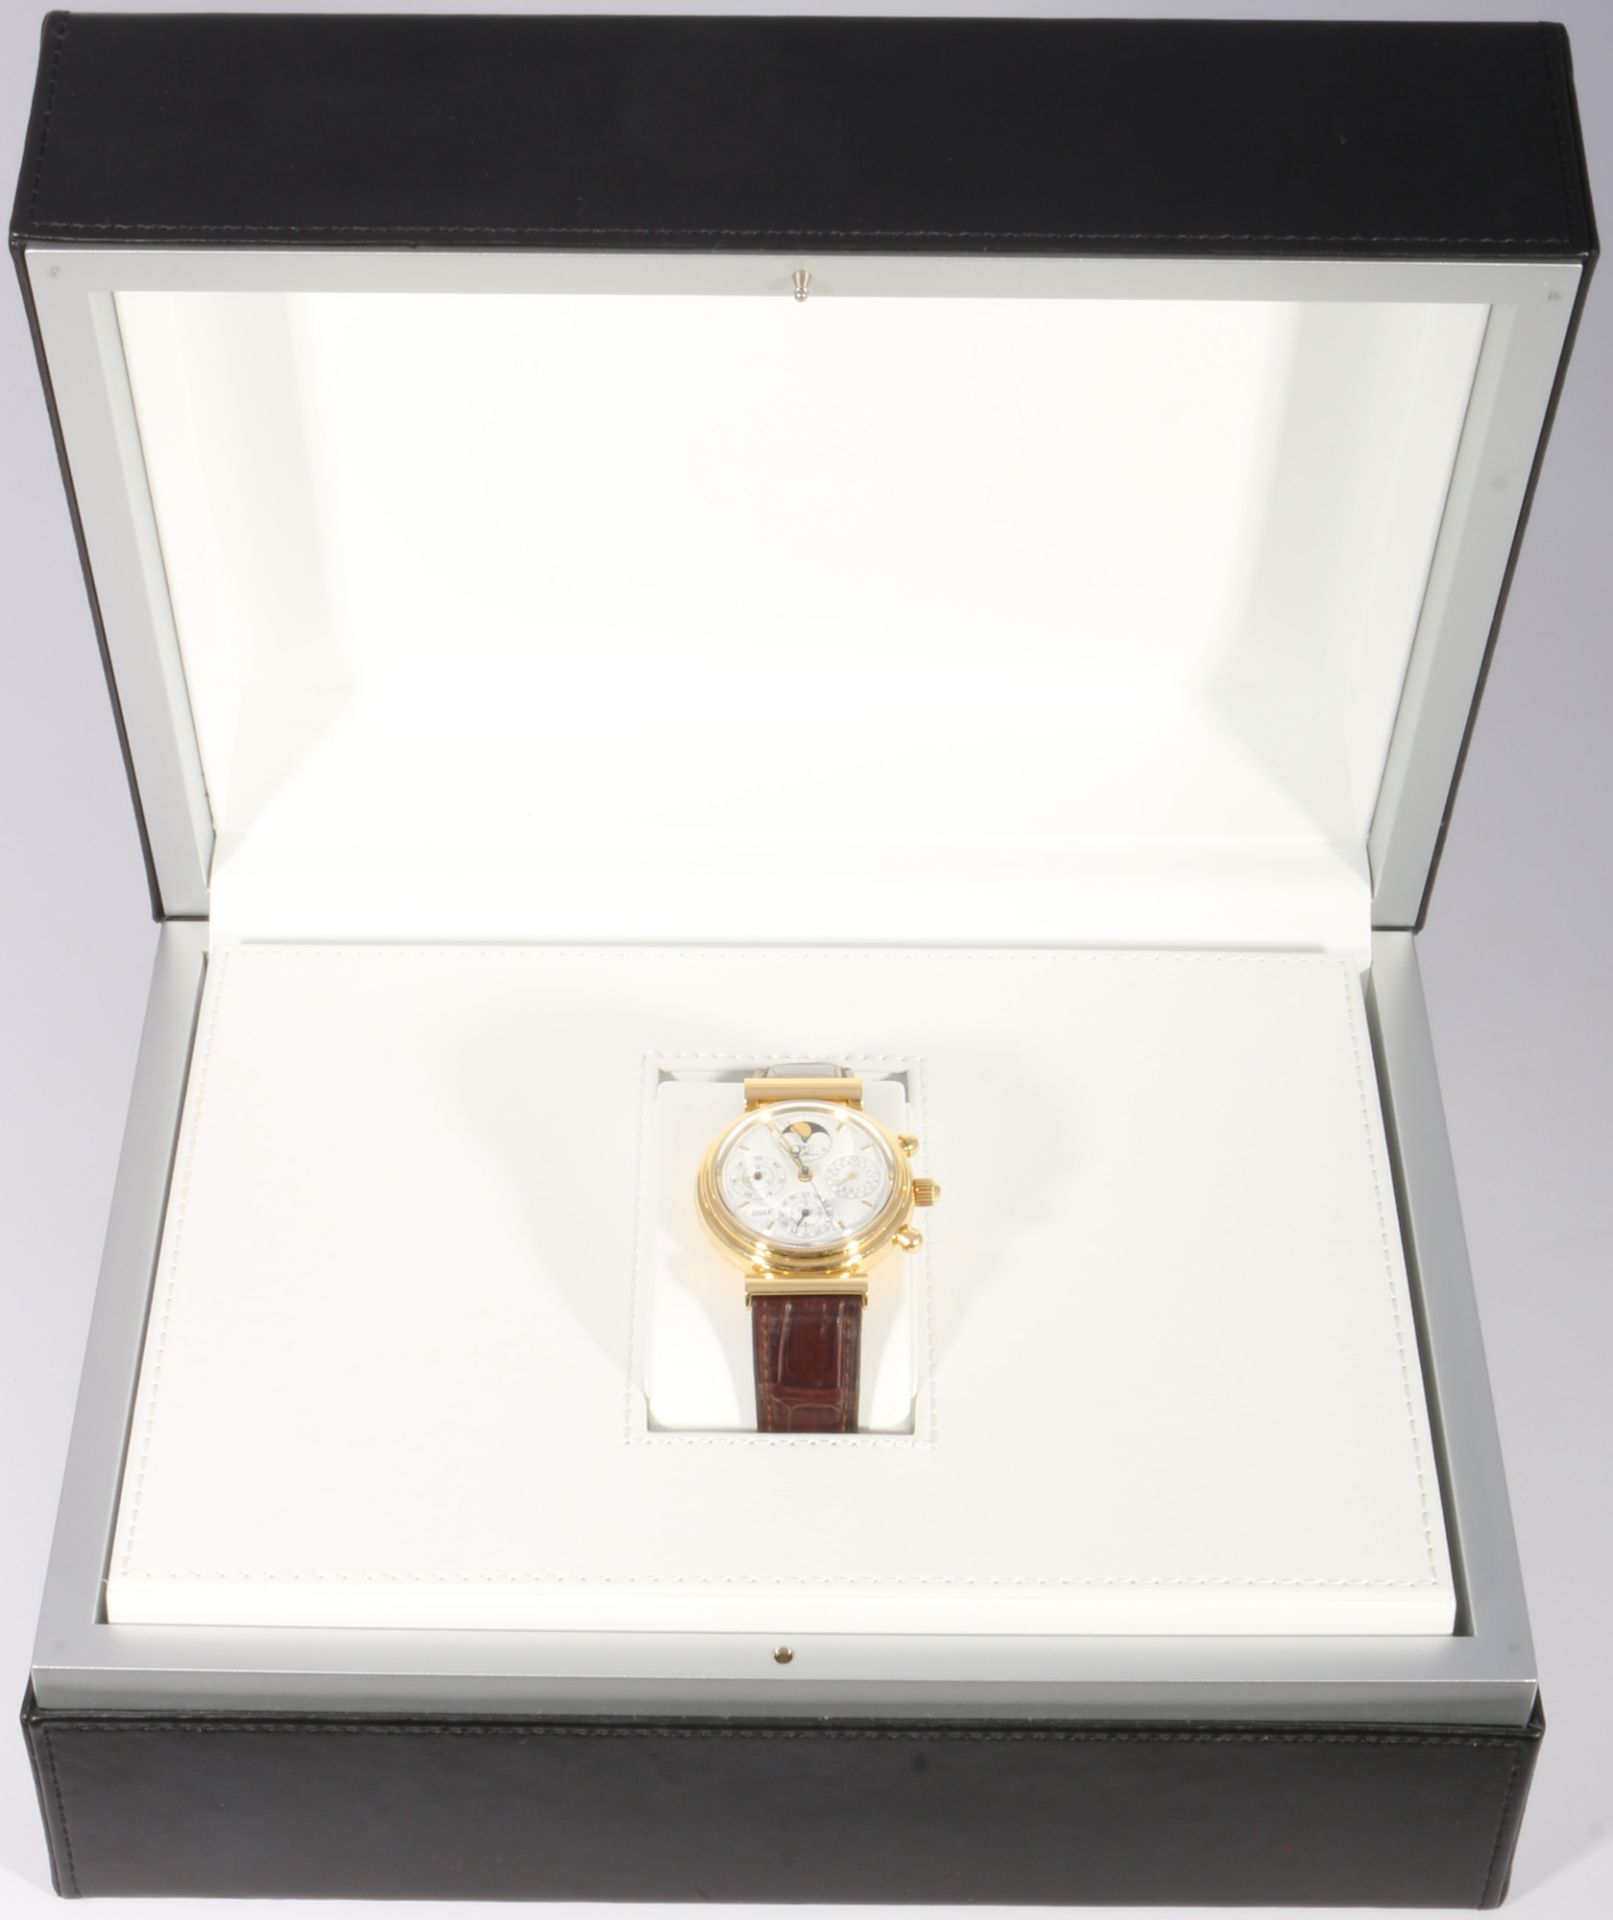 IWC Da Vinci Automatik 750 Gold Herren Armbanduhr IW3750, 18K gold men's wrist watch, - Image 4 of 11